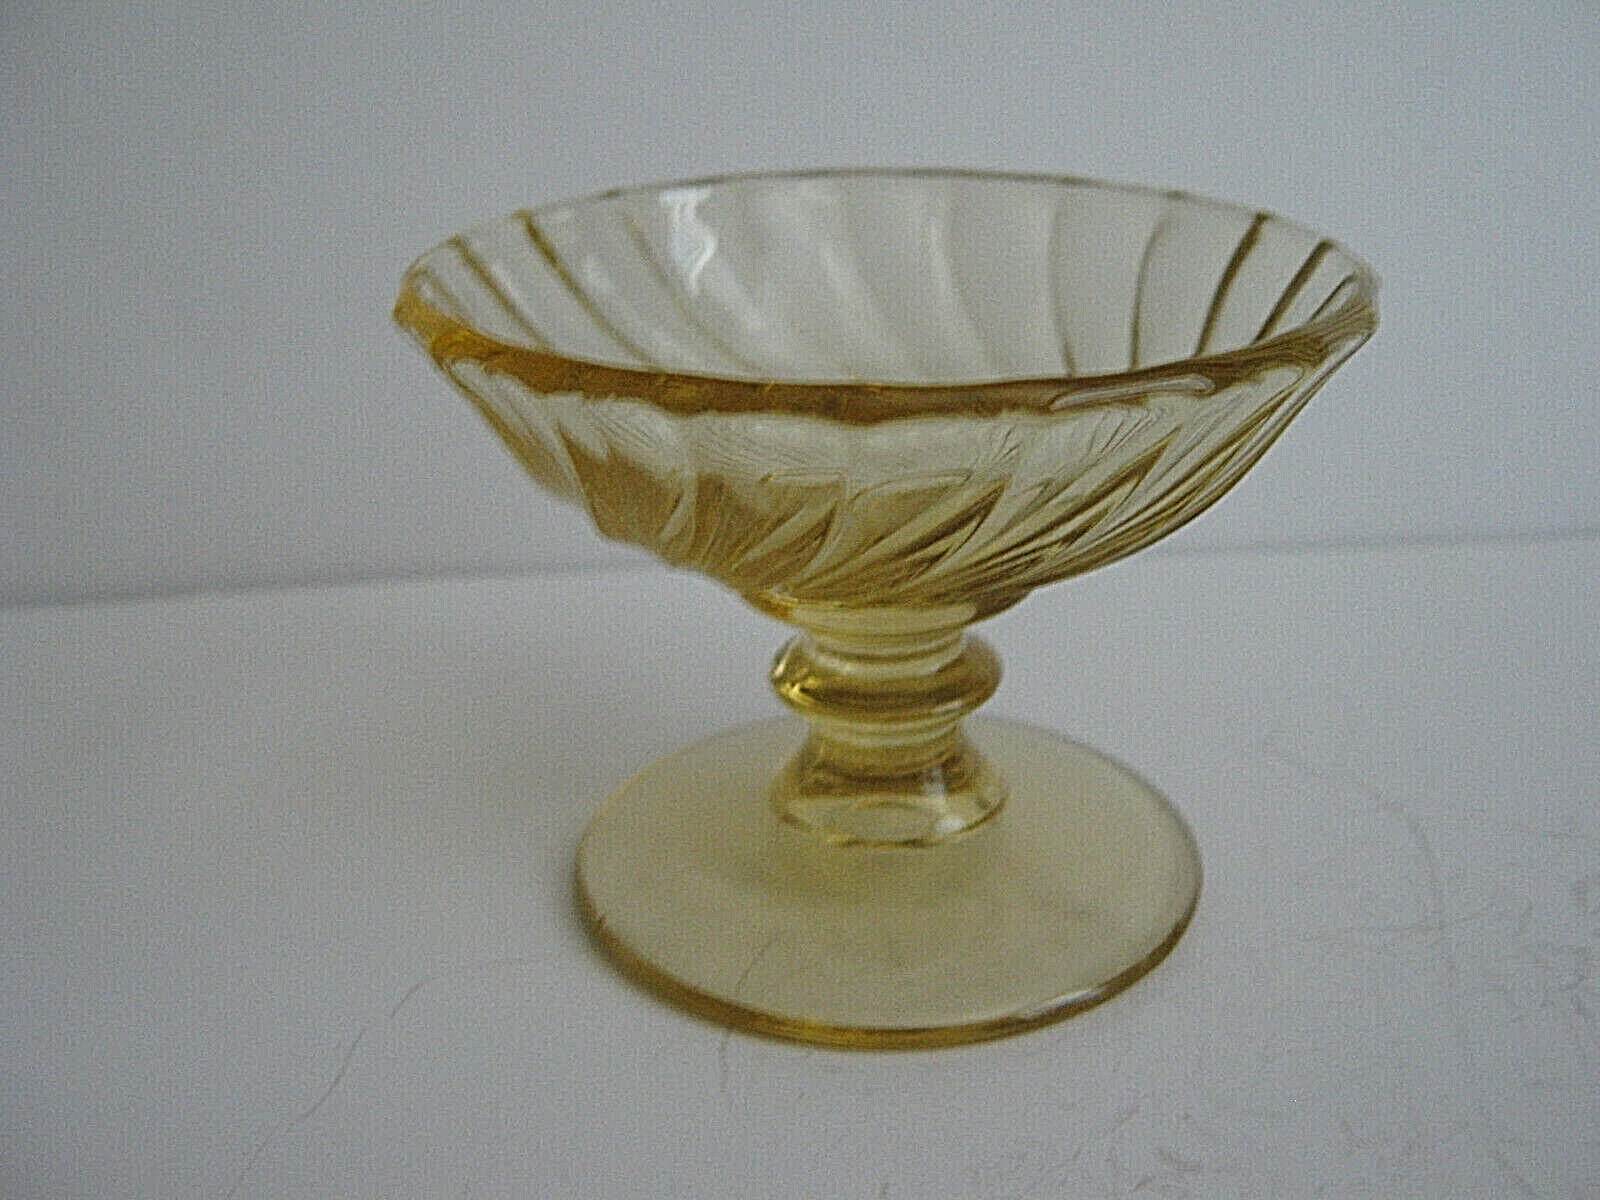 DUNCAN & MILLER AMBER SPIRAL FLUTES GLASS NUT CUP/OPEN SALT CELLAR, c1924